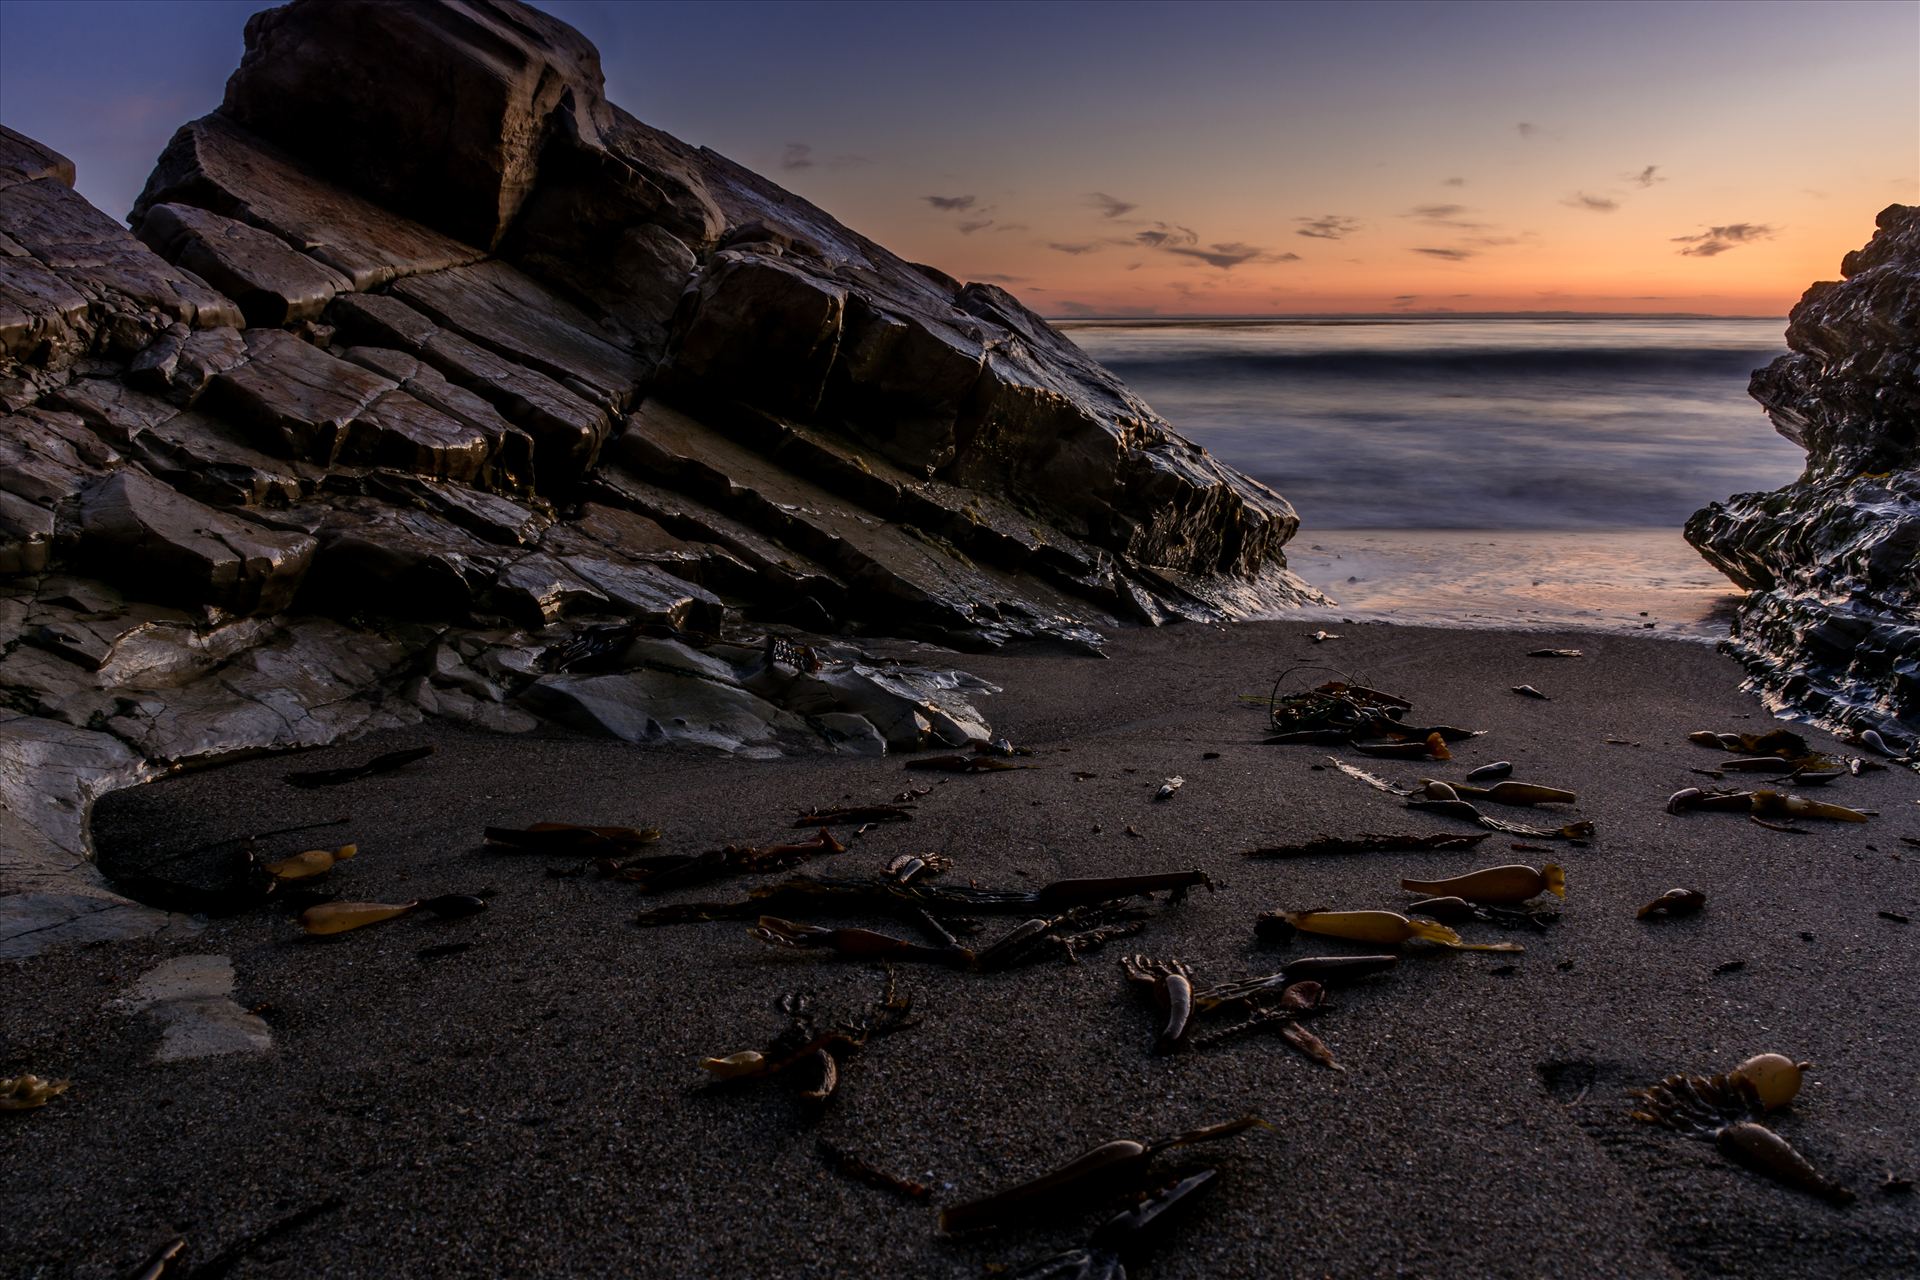 Soft Sea and Rocks.jpg - Highway 1 Ocean Sunset in Pismo Beach, California by Sarah Williams